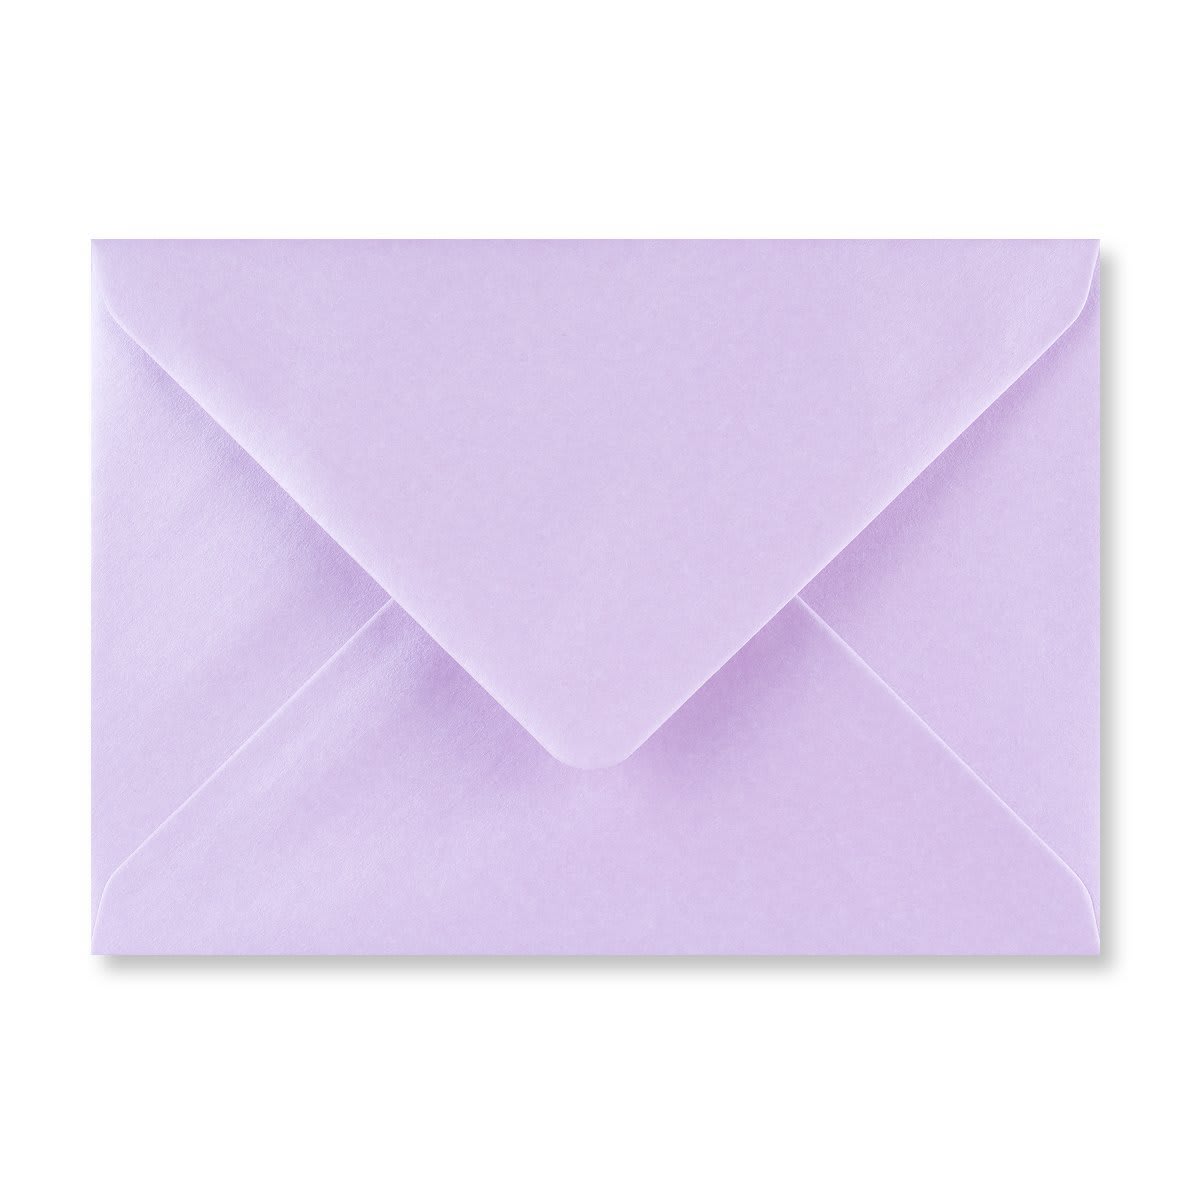 Lilac Lustre 120 x 175mm Envelopes 100gsm